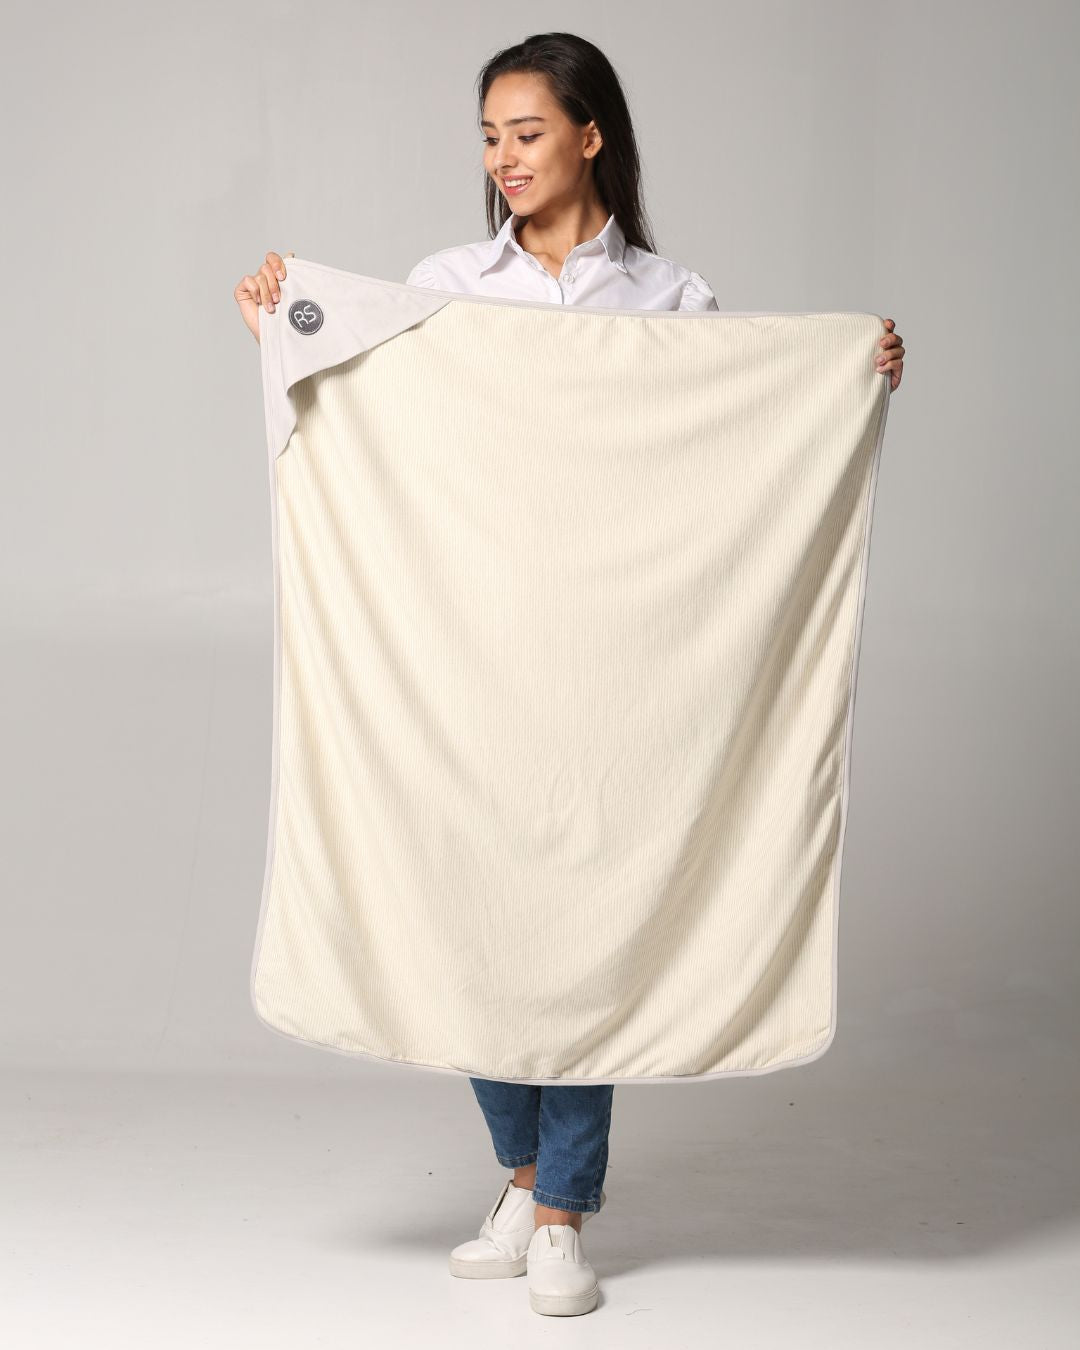 Radia Smart Joy Organic Blanket EMF Protection, Anti-radiation 